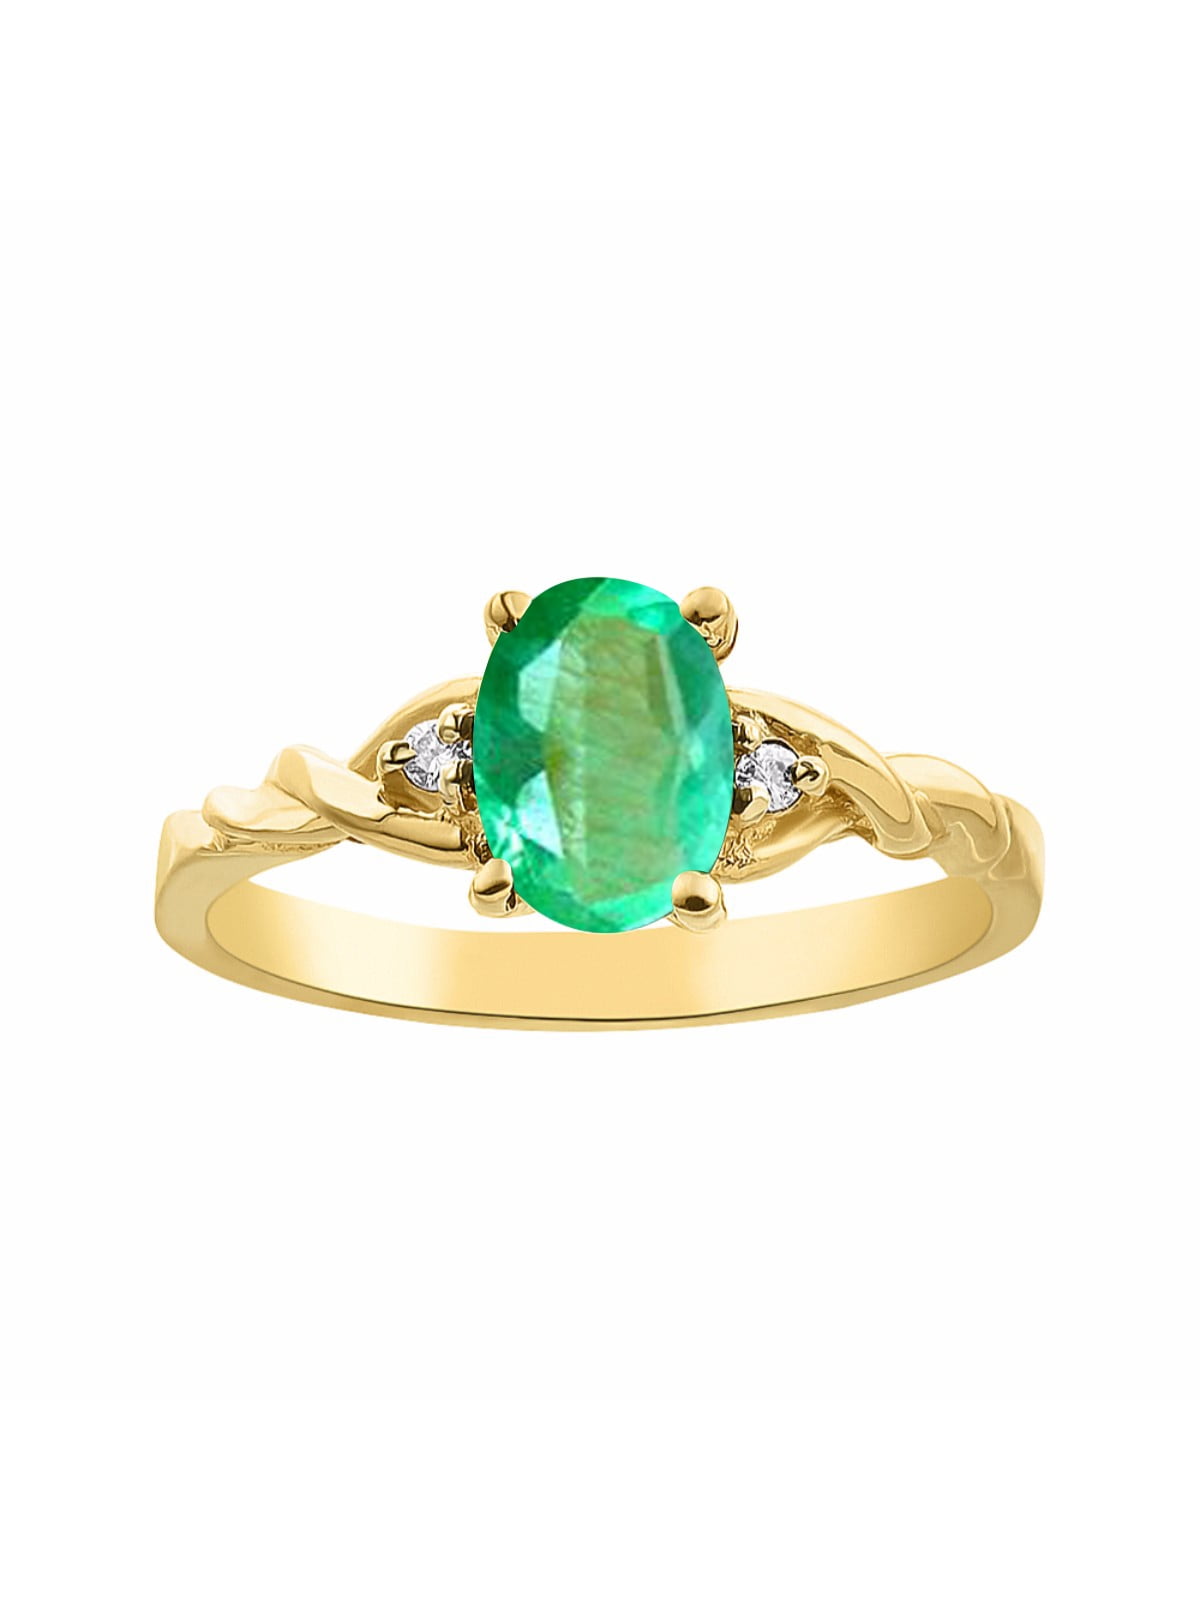 sizes 5-10 14K Yellow Gold Natural Peridot Ring Oval 6x4mm Diamond Accent